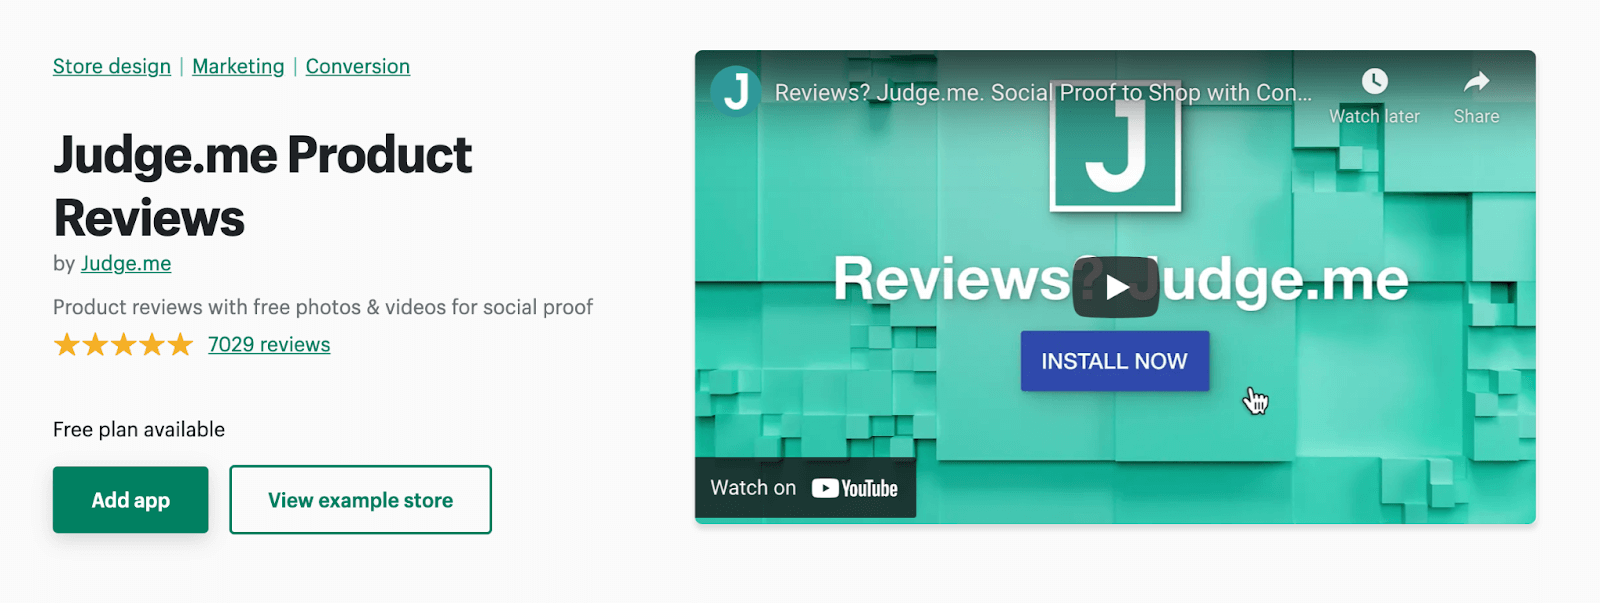 Shopify App Store- Judge.me Product Reviews- Conversion Rate